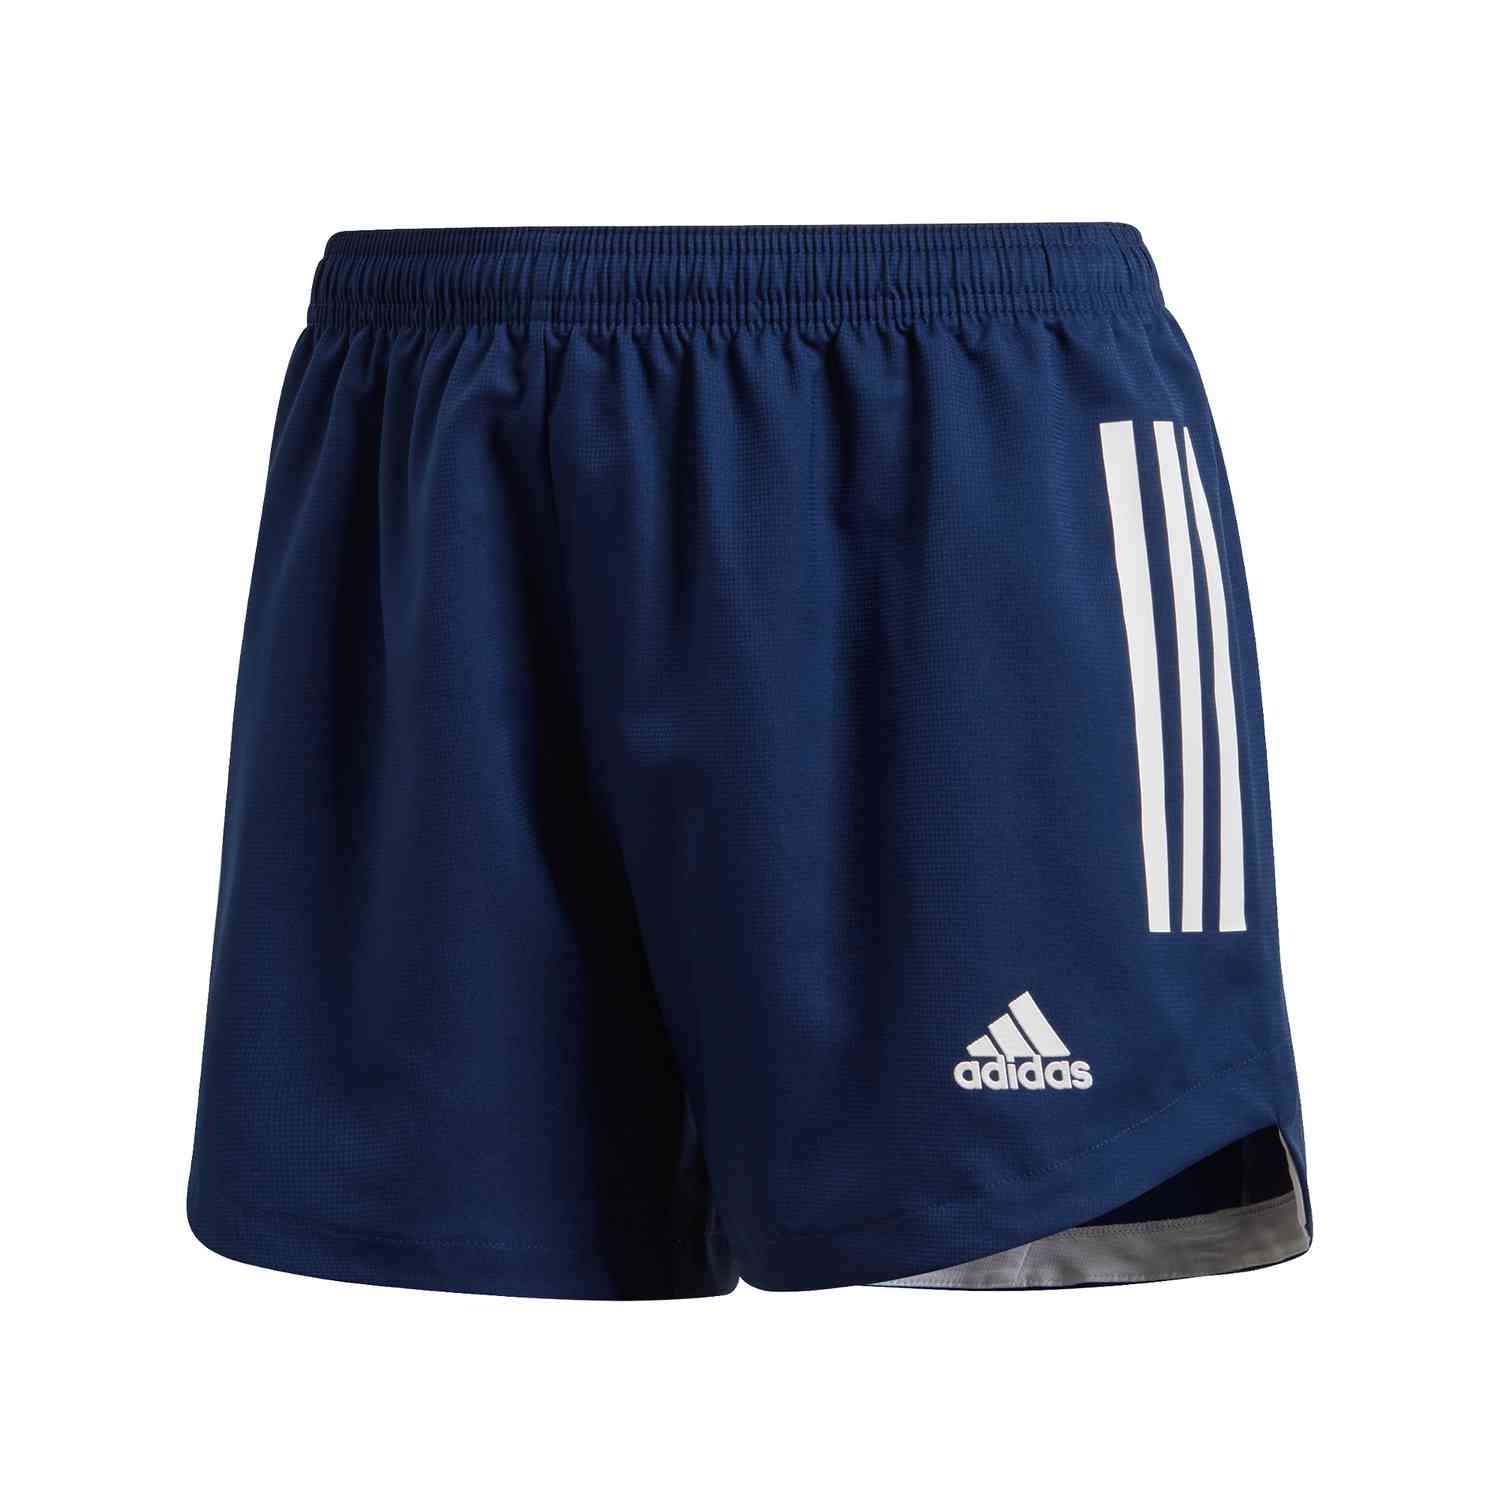 adidas navy blue shorts womens